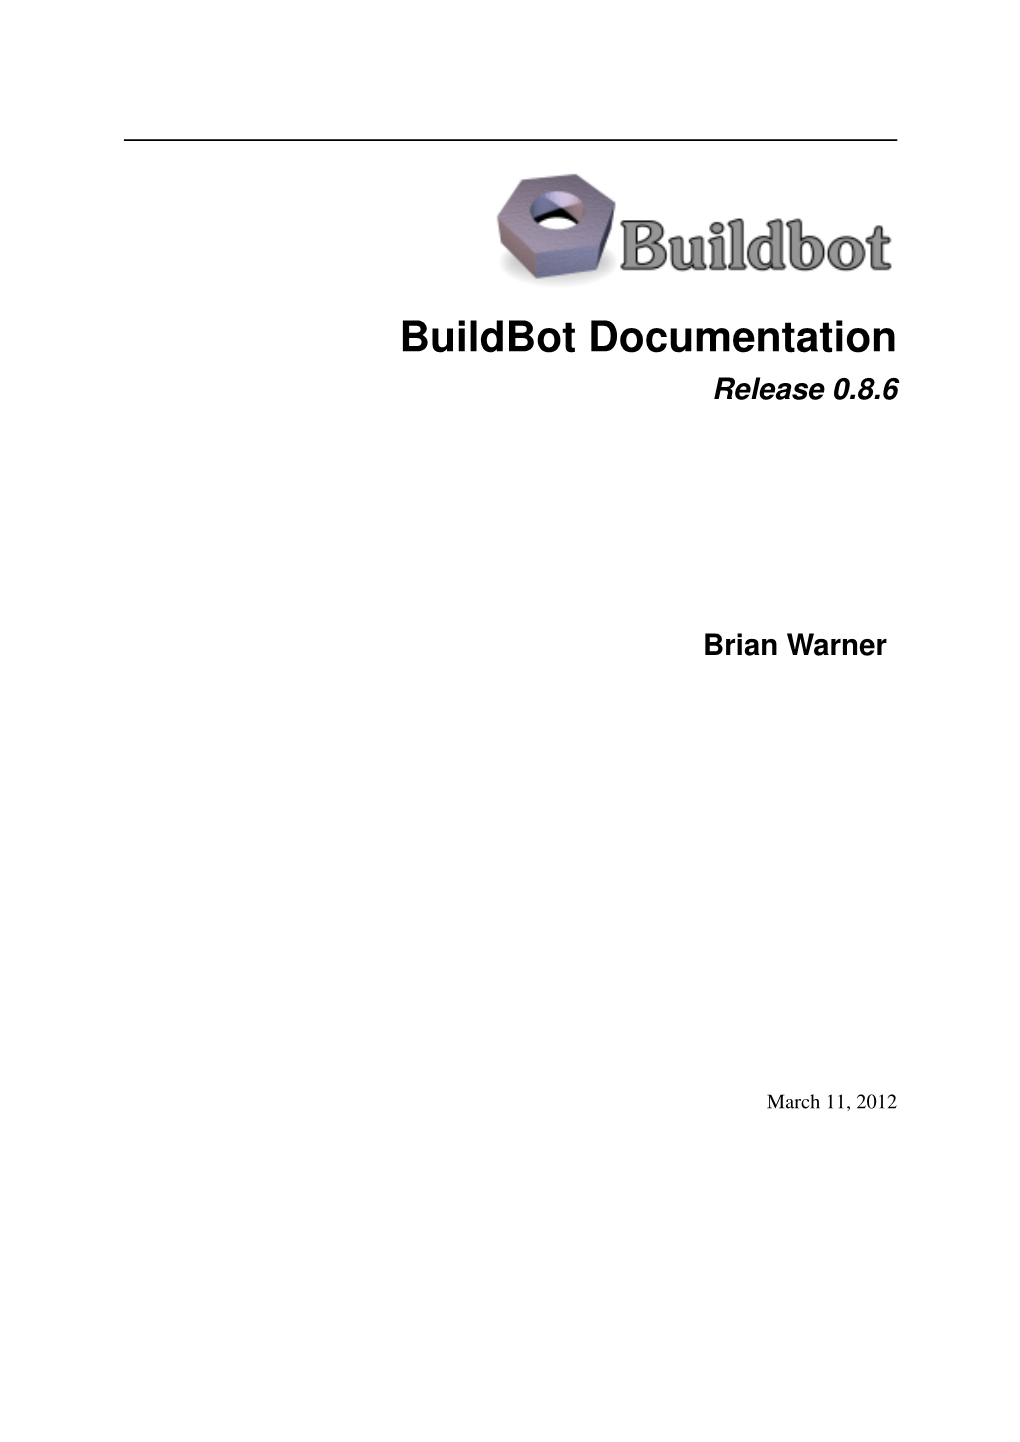 Buildbot Documentation Release 0.8.6